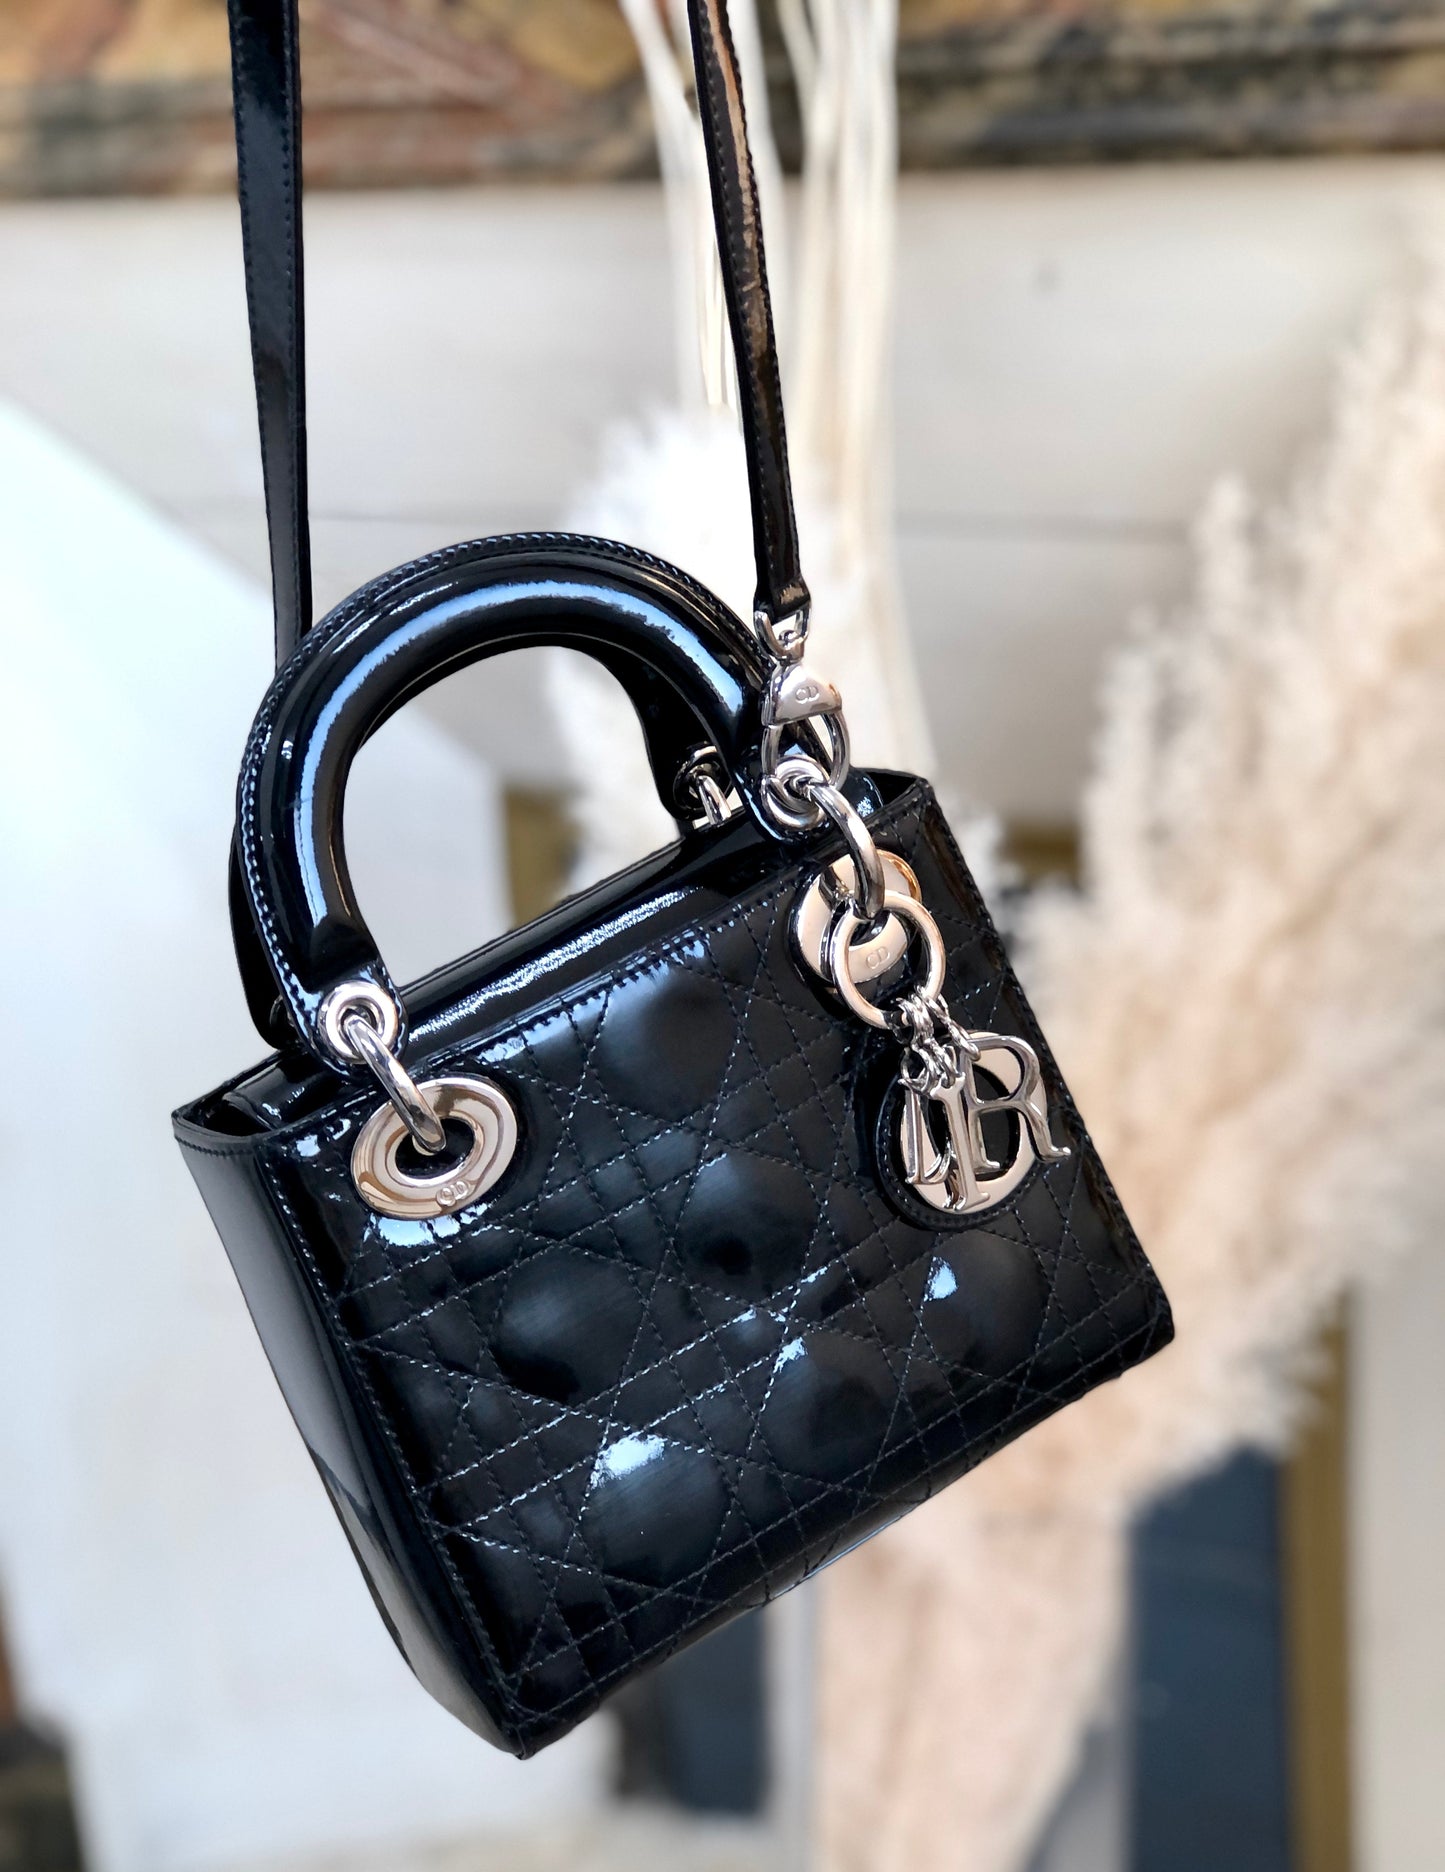 Christian Dior Cannage Lady dior Patent leather Handbag Shoulder bag Black e3i7xj